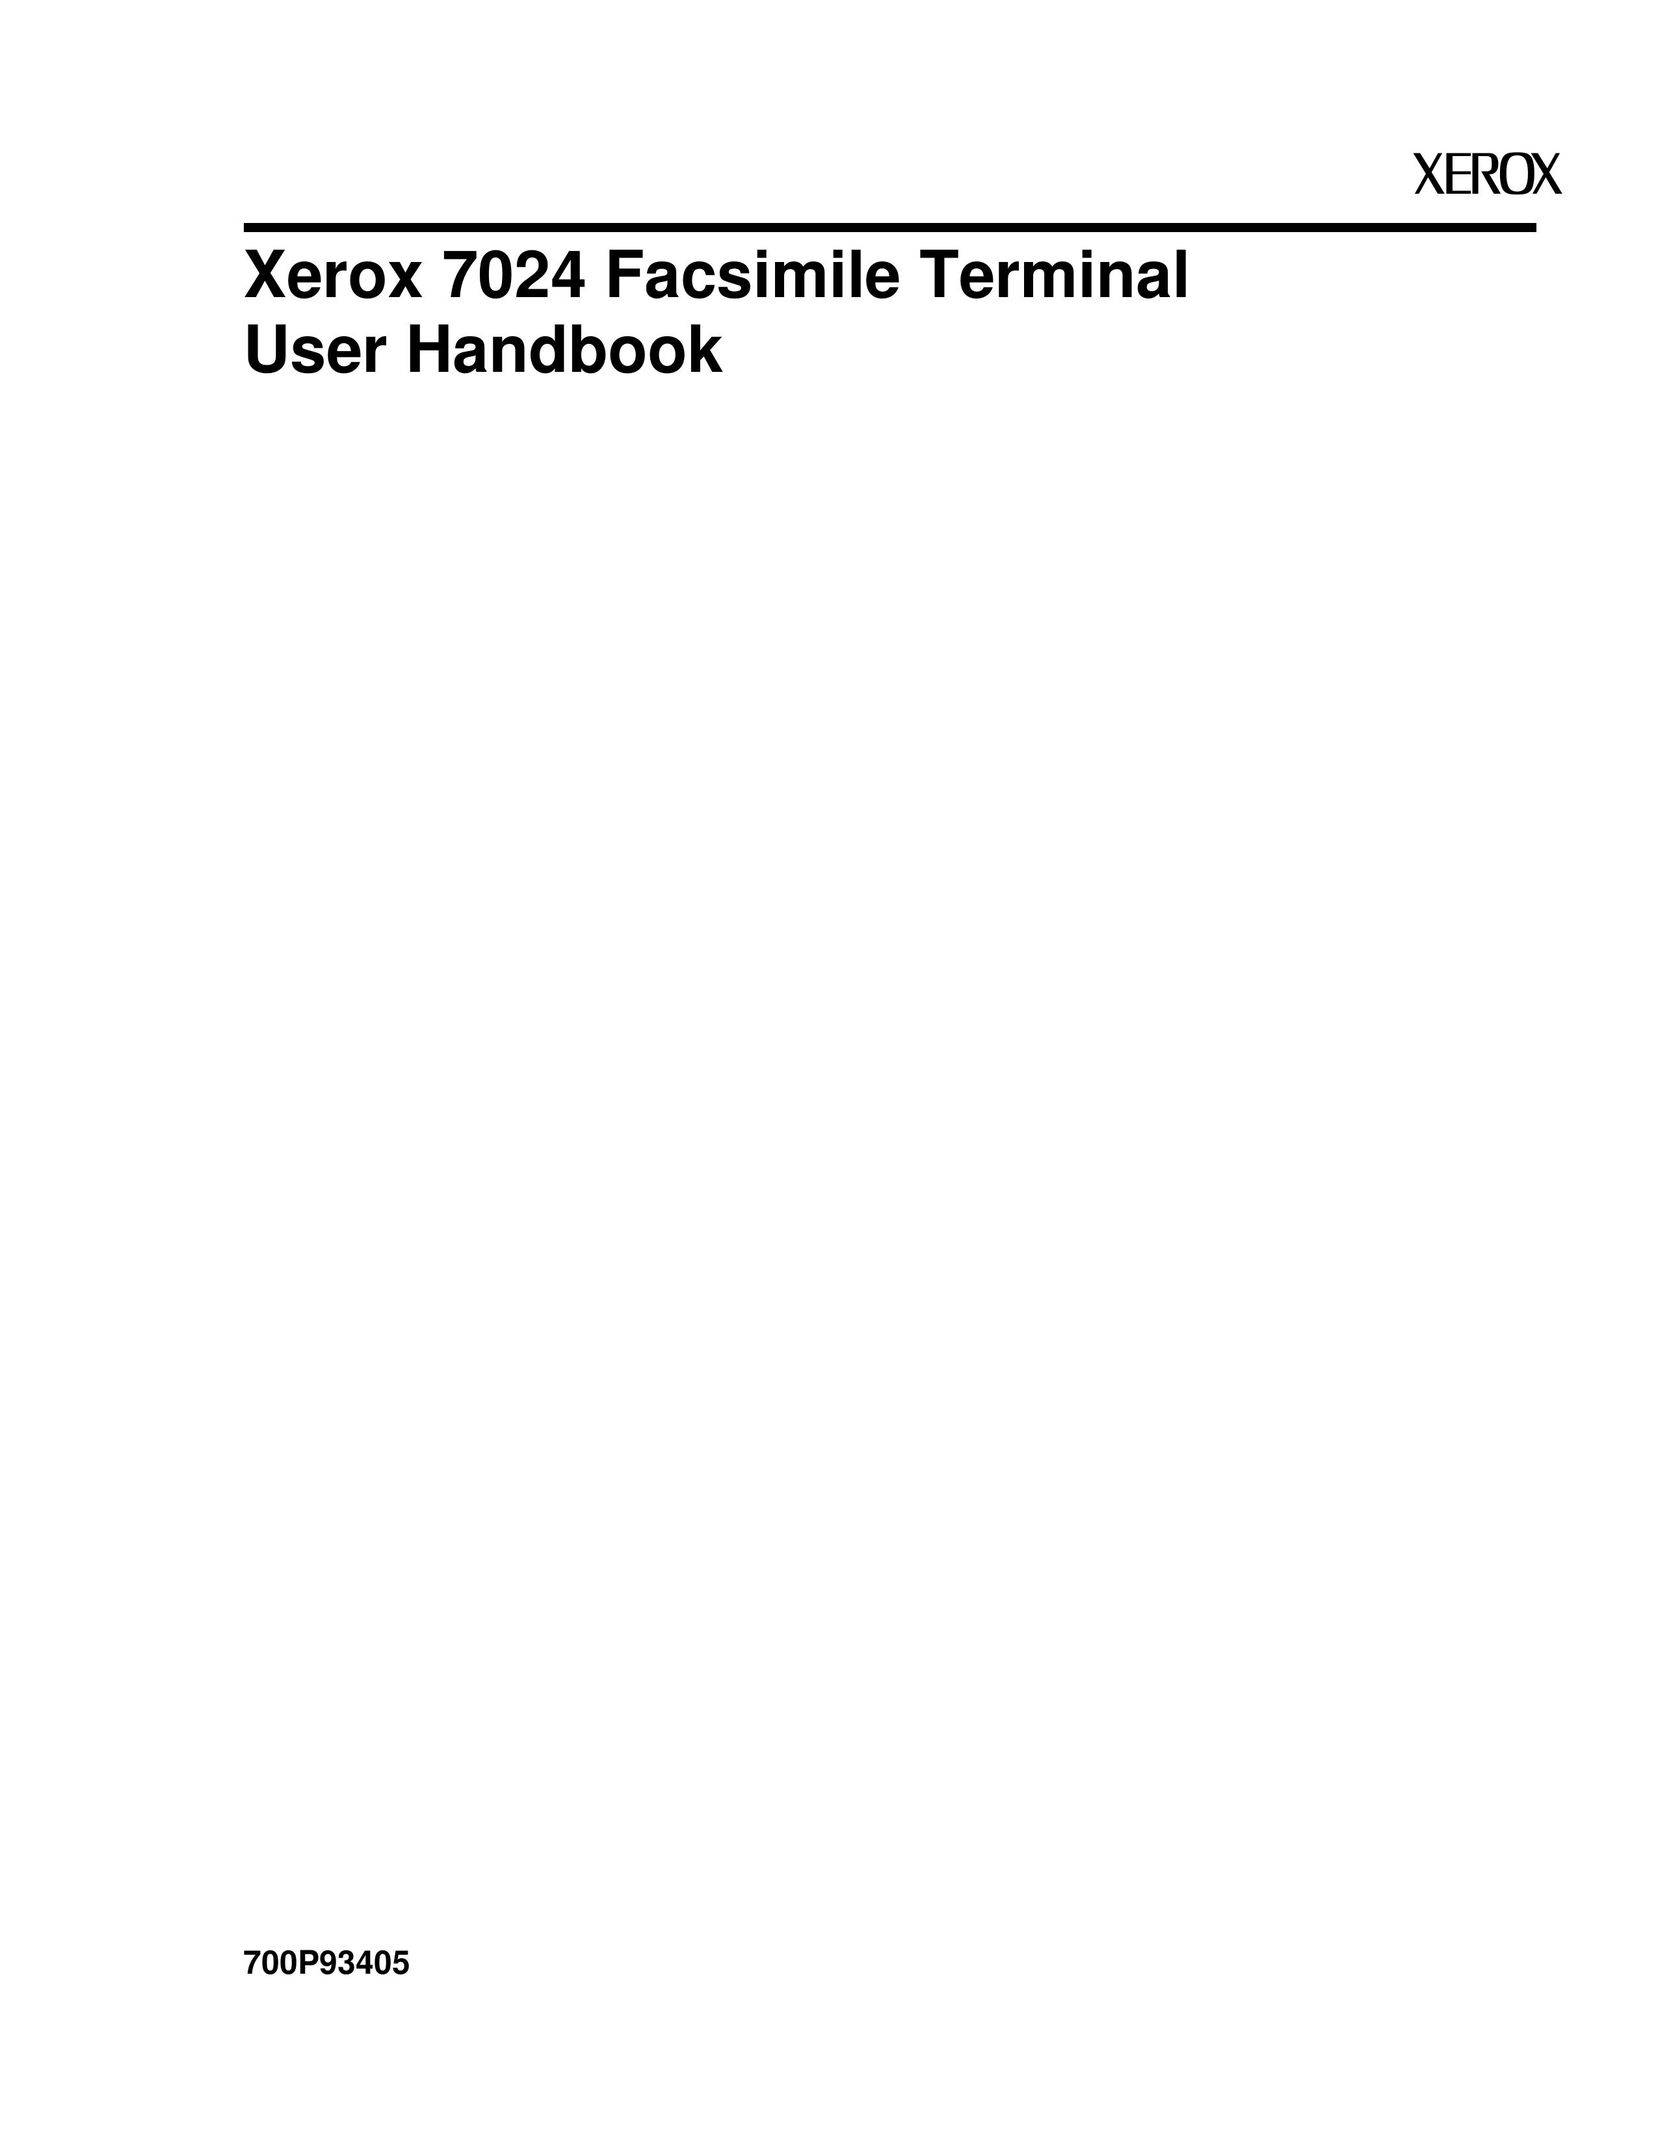 Xerox 7024 Fax Machine User Manual